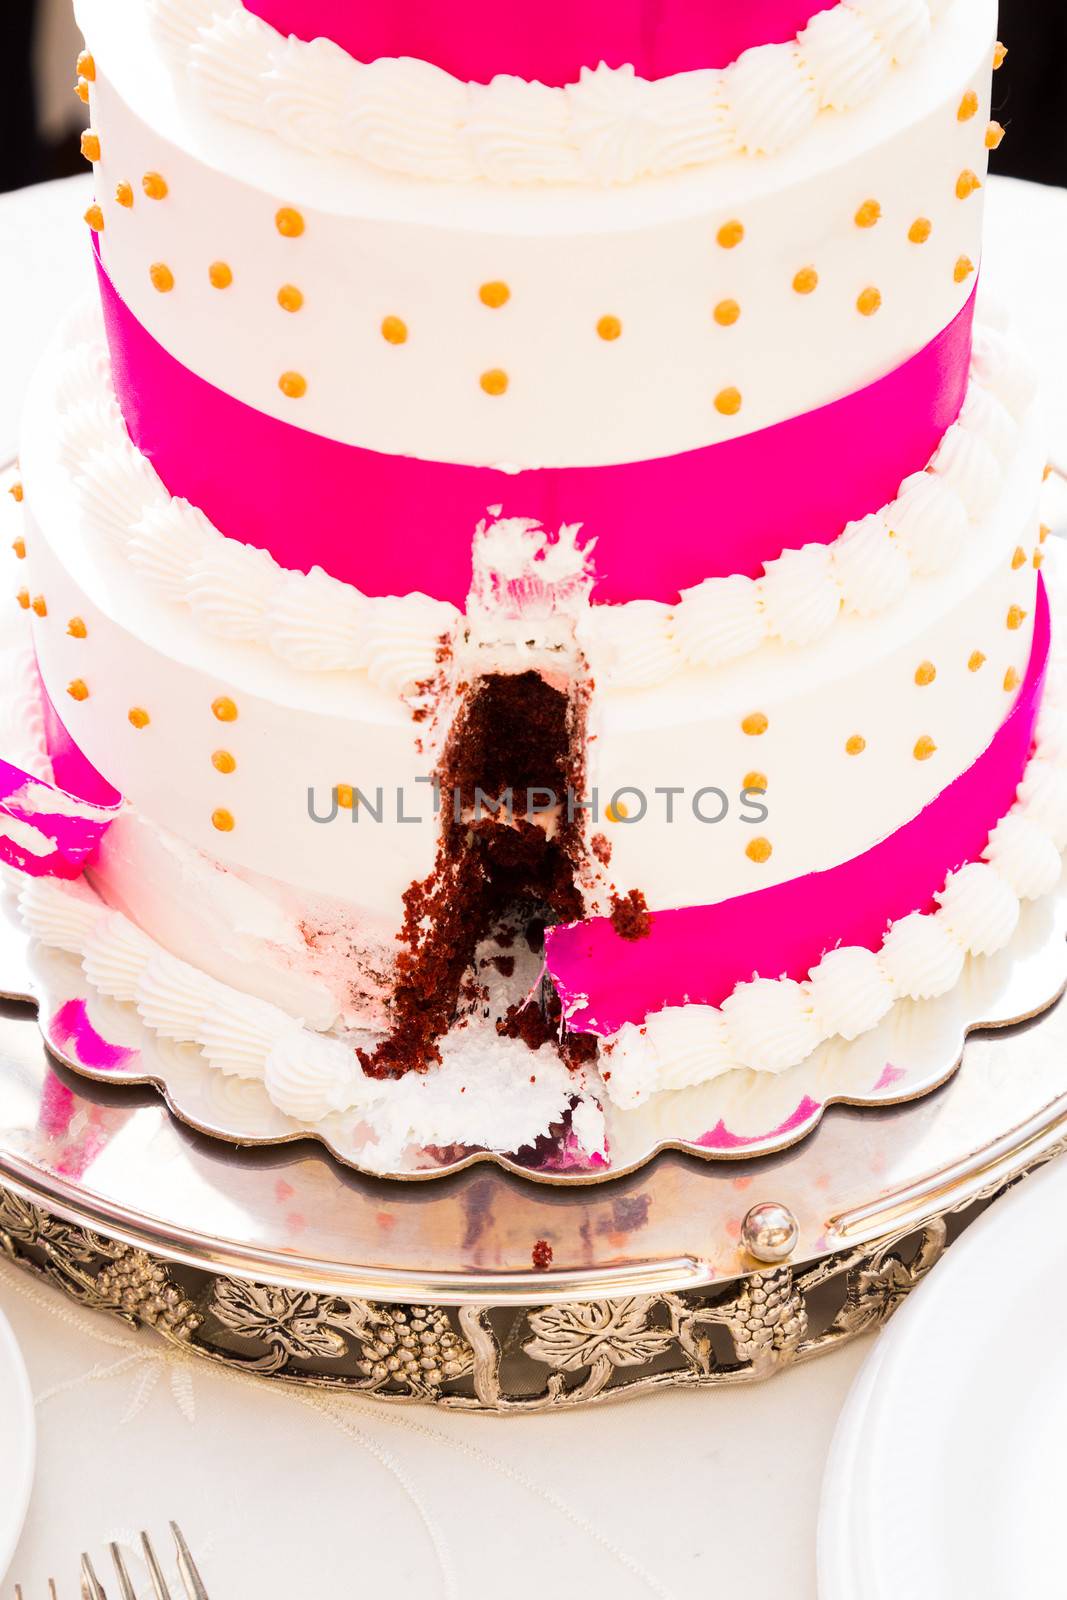 Cutting The Wedding Cake by joshuaraineyphotography